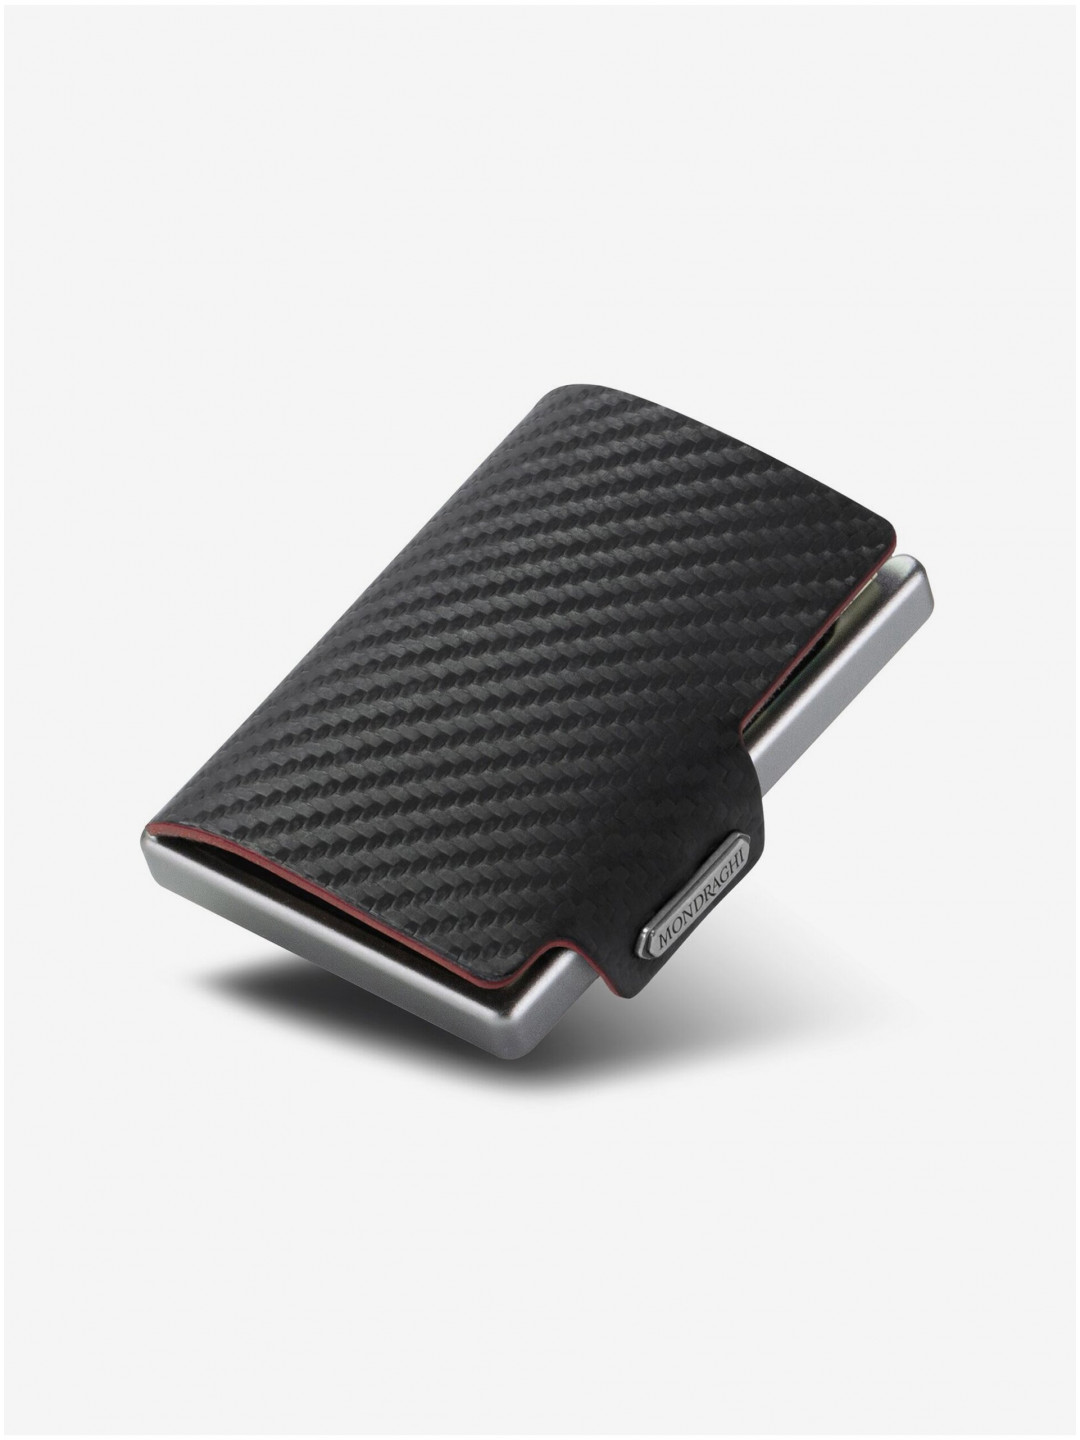 Černá vzorovaná kožená peněženka Mondraghi Carbon Plus